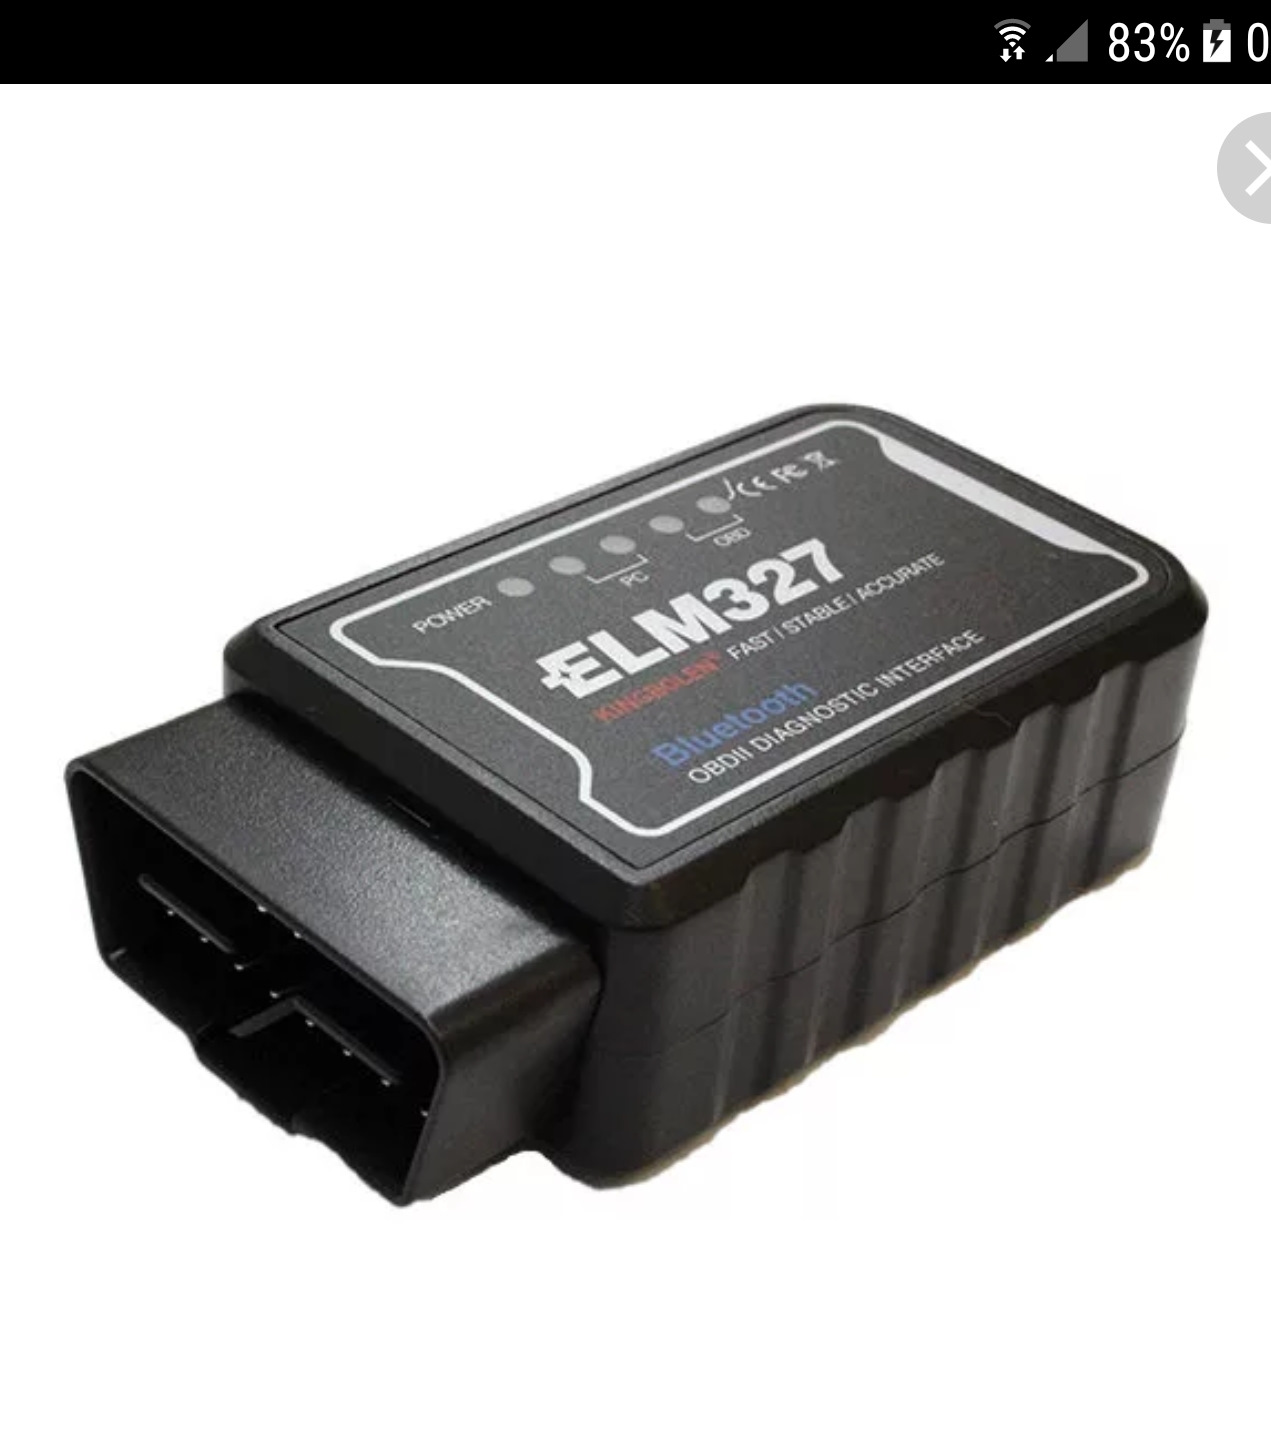 Автосканер v 1.5. Bluetooth адаптер(автосканер) Elm 327 Mini OBD II. OBD 2 адаптер elm327. Диагностический адаптер elm327 Bluetooth. Елм 327 v1.5.